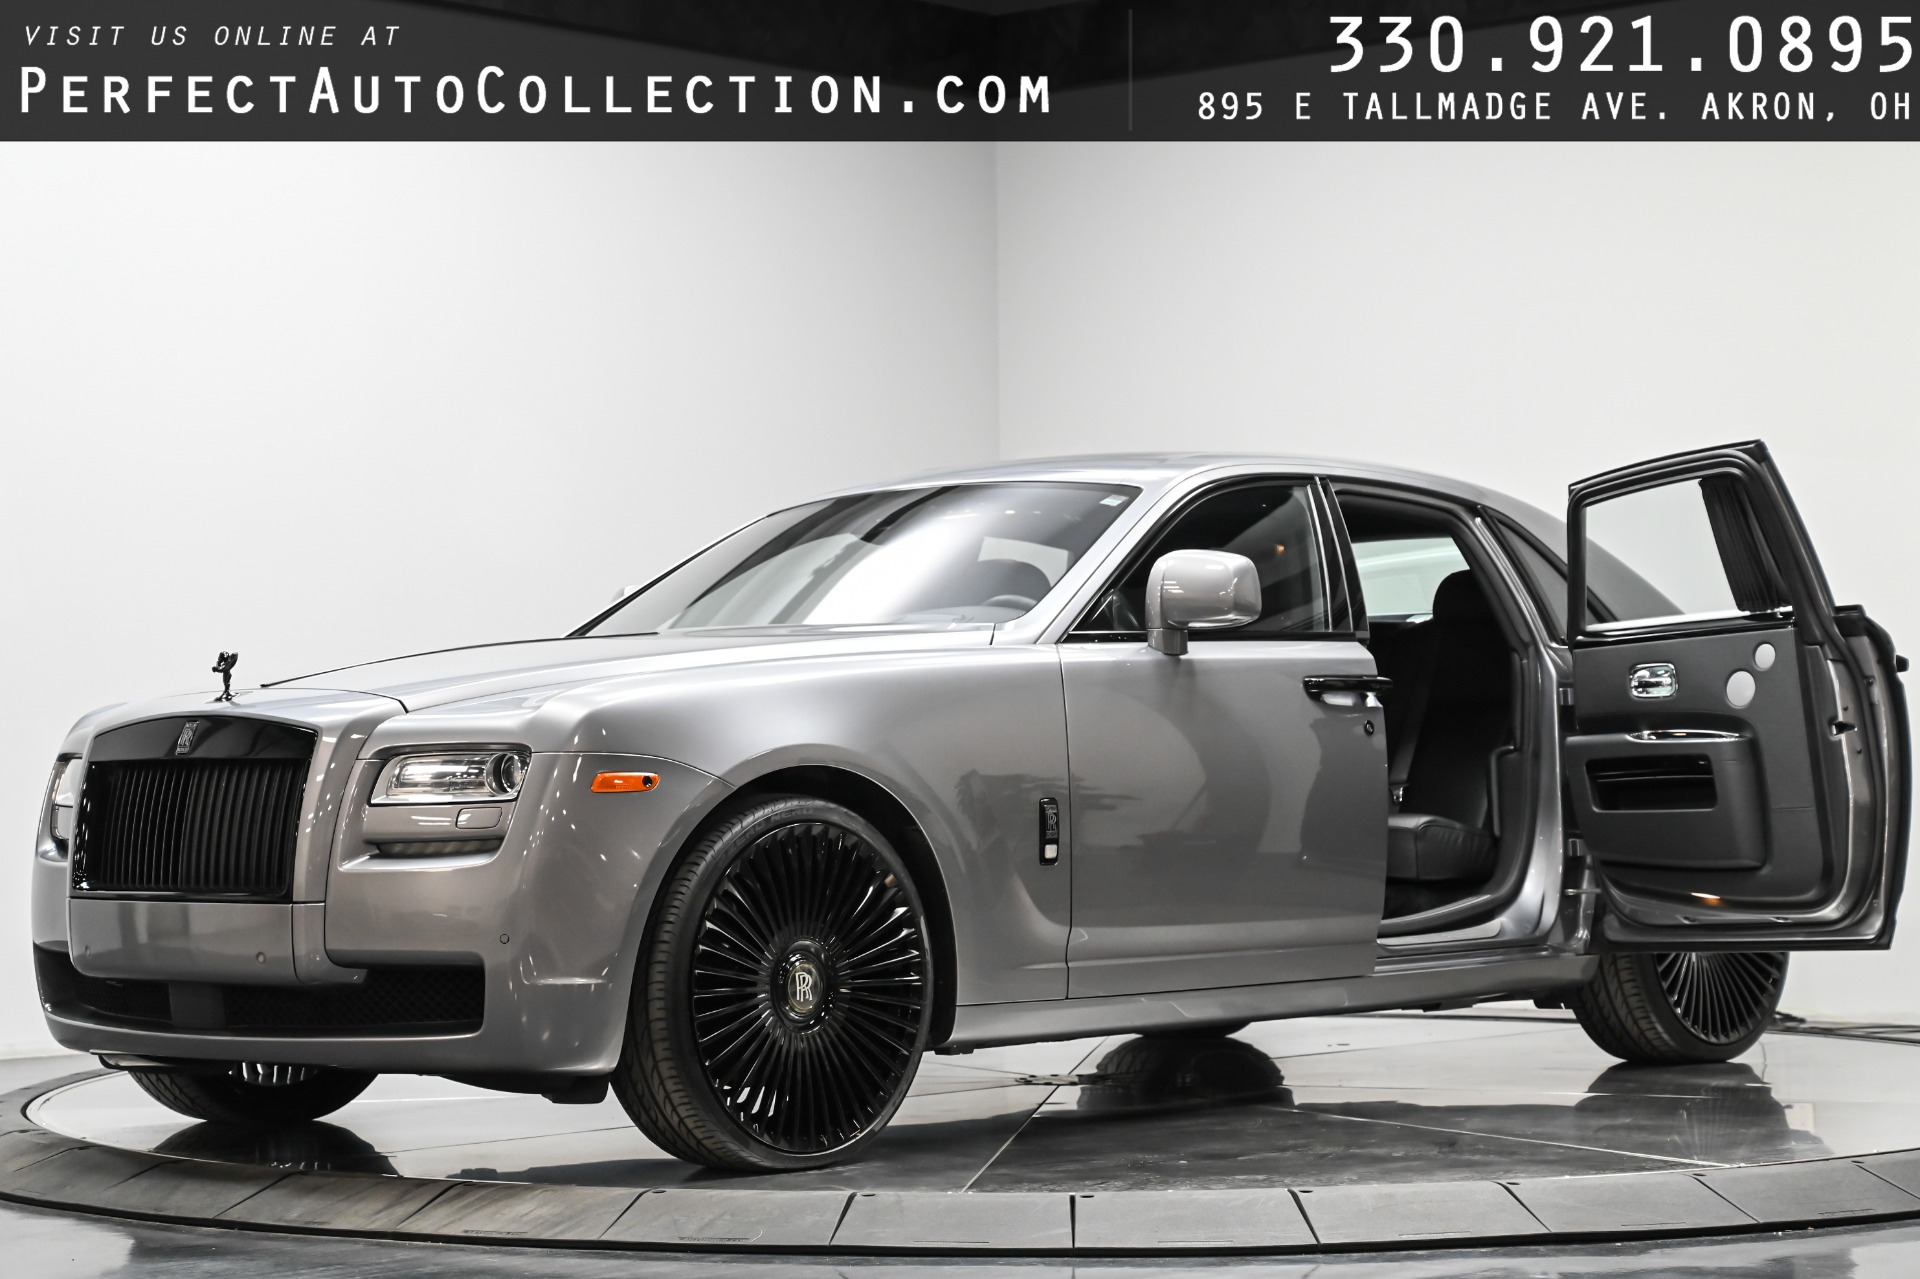 Rolls-Royce Phantom Series II Platino for Sale